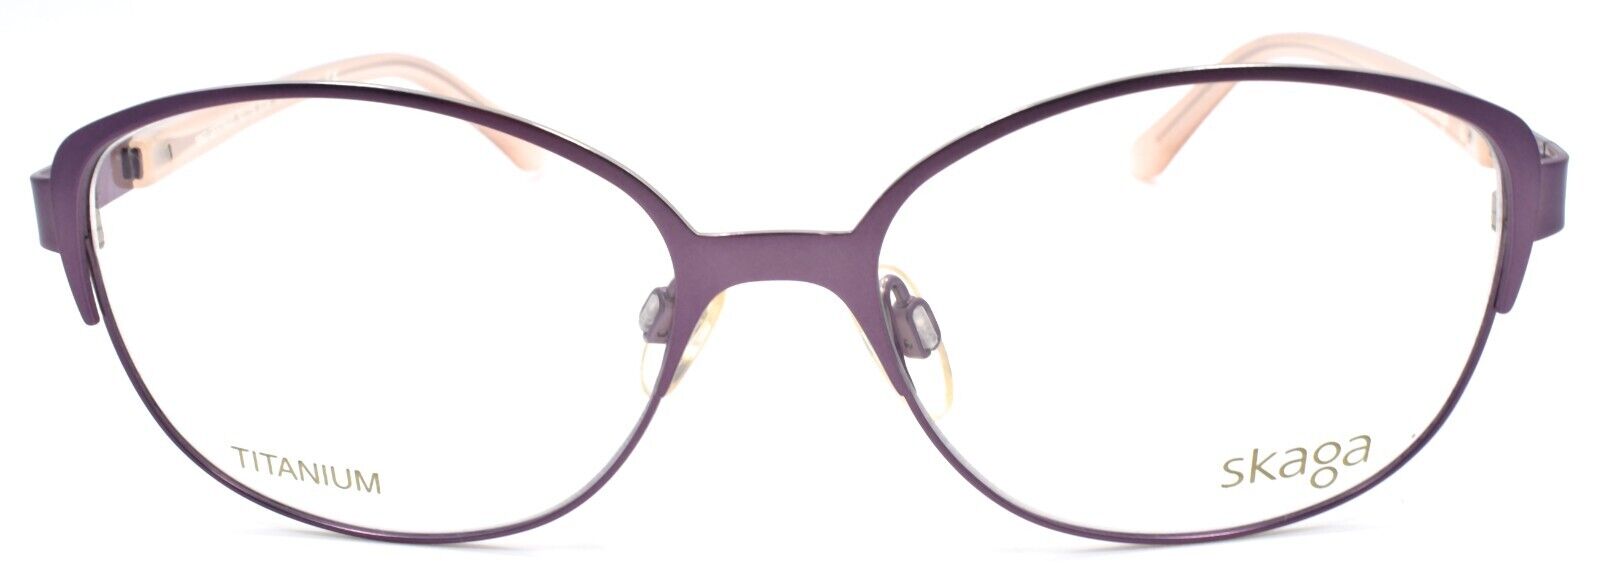 3-Skaga 3862 Ulrika 5109 Women's Eyeglasses Frames Titanium 52-15-135 Lilac-Does not apply-IKSpecs